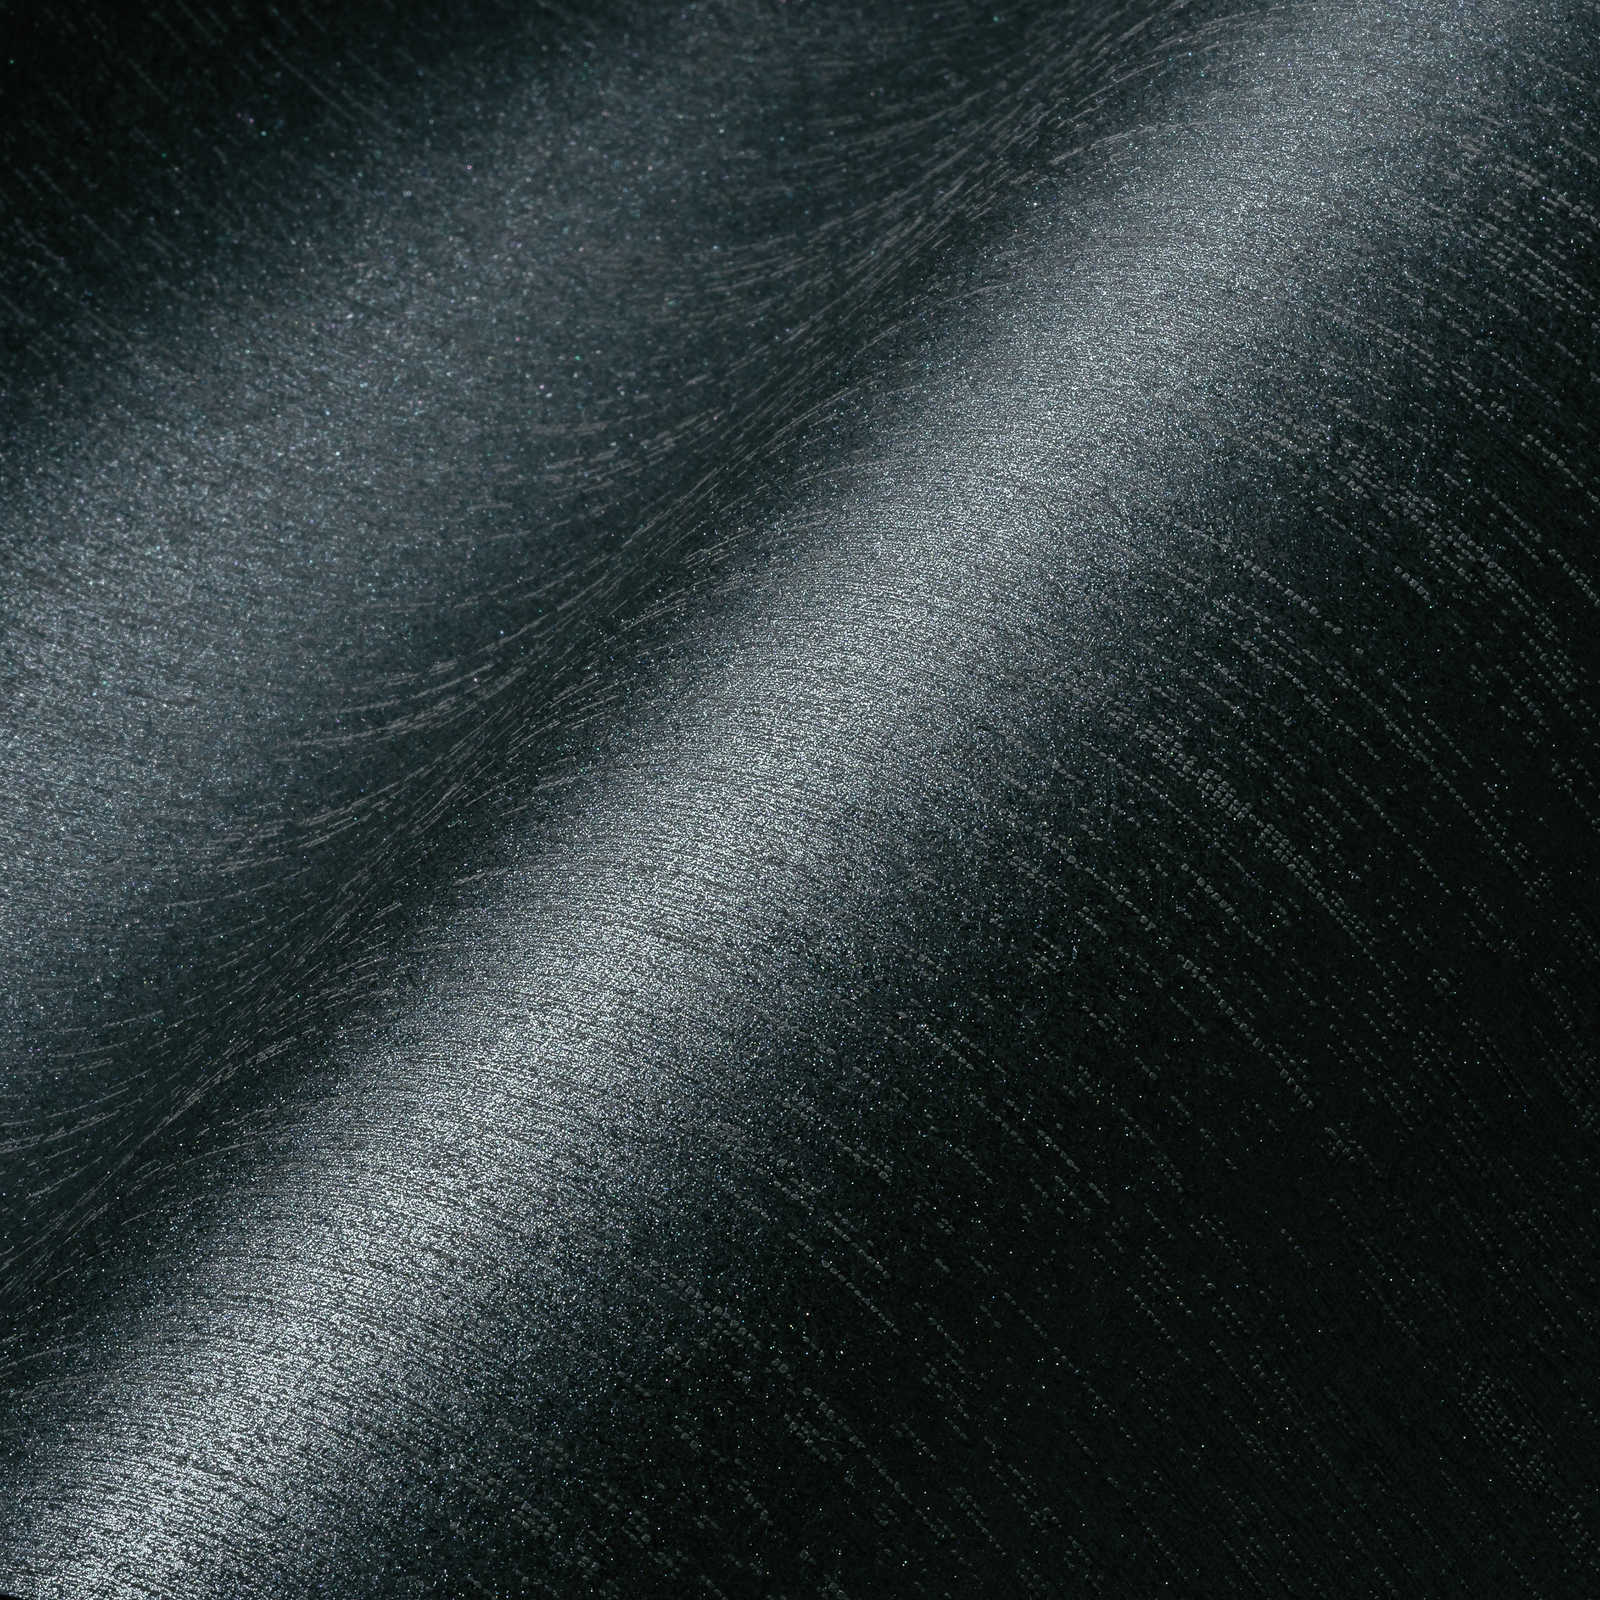             Tapete Anthrazit Grau mit silbernem Glanz-Effekt – Schwarz, Grau
        